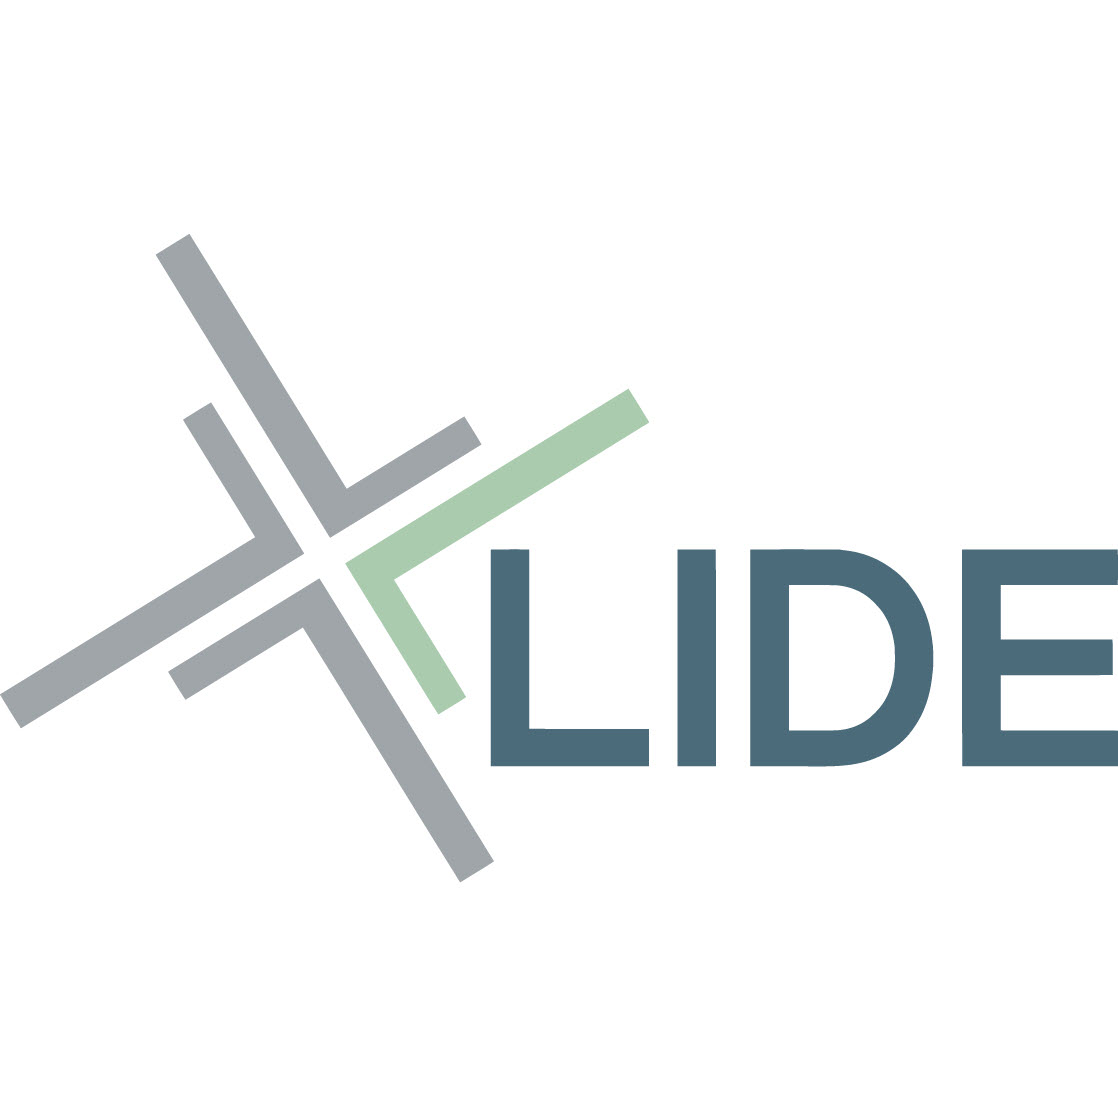 LIDE logo in the highest resolution